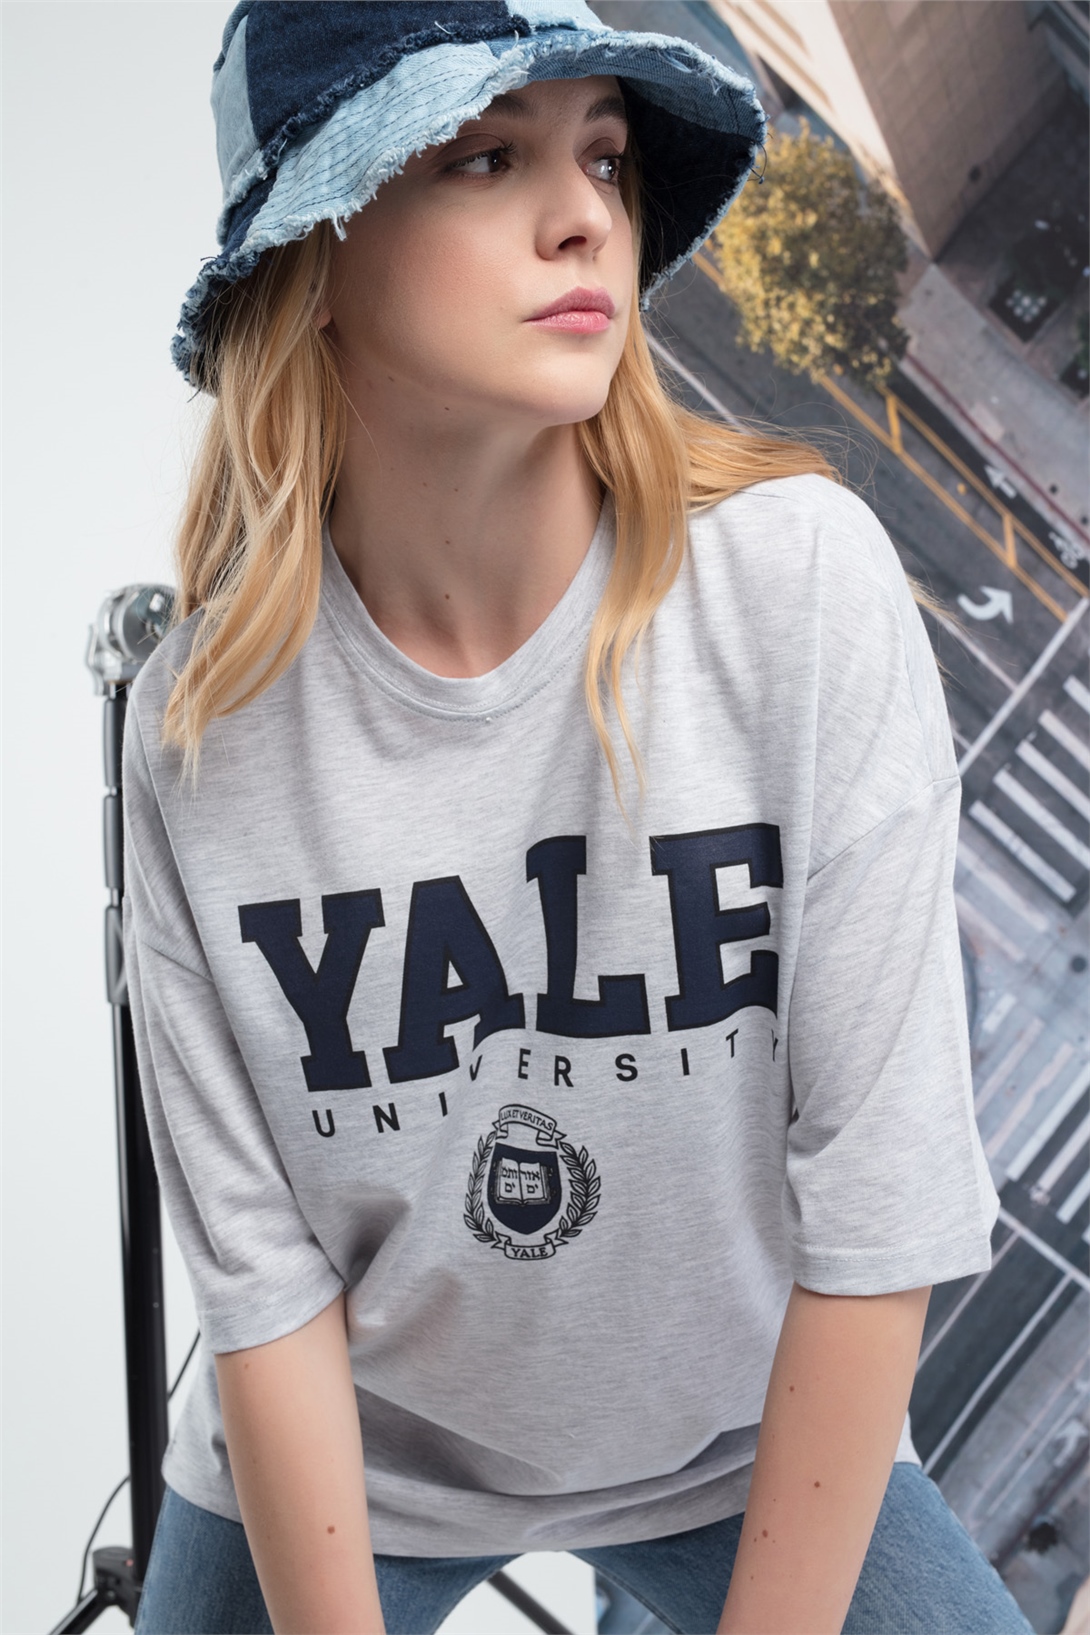 Trendiz Unisex Yale Tshirt Beyaz